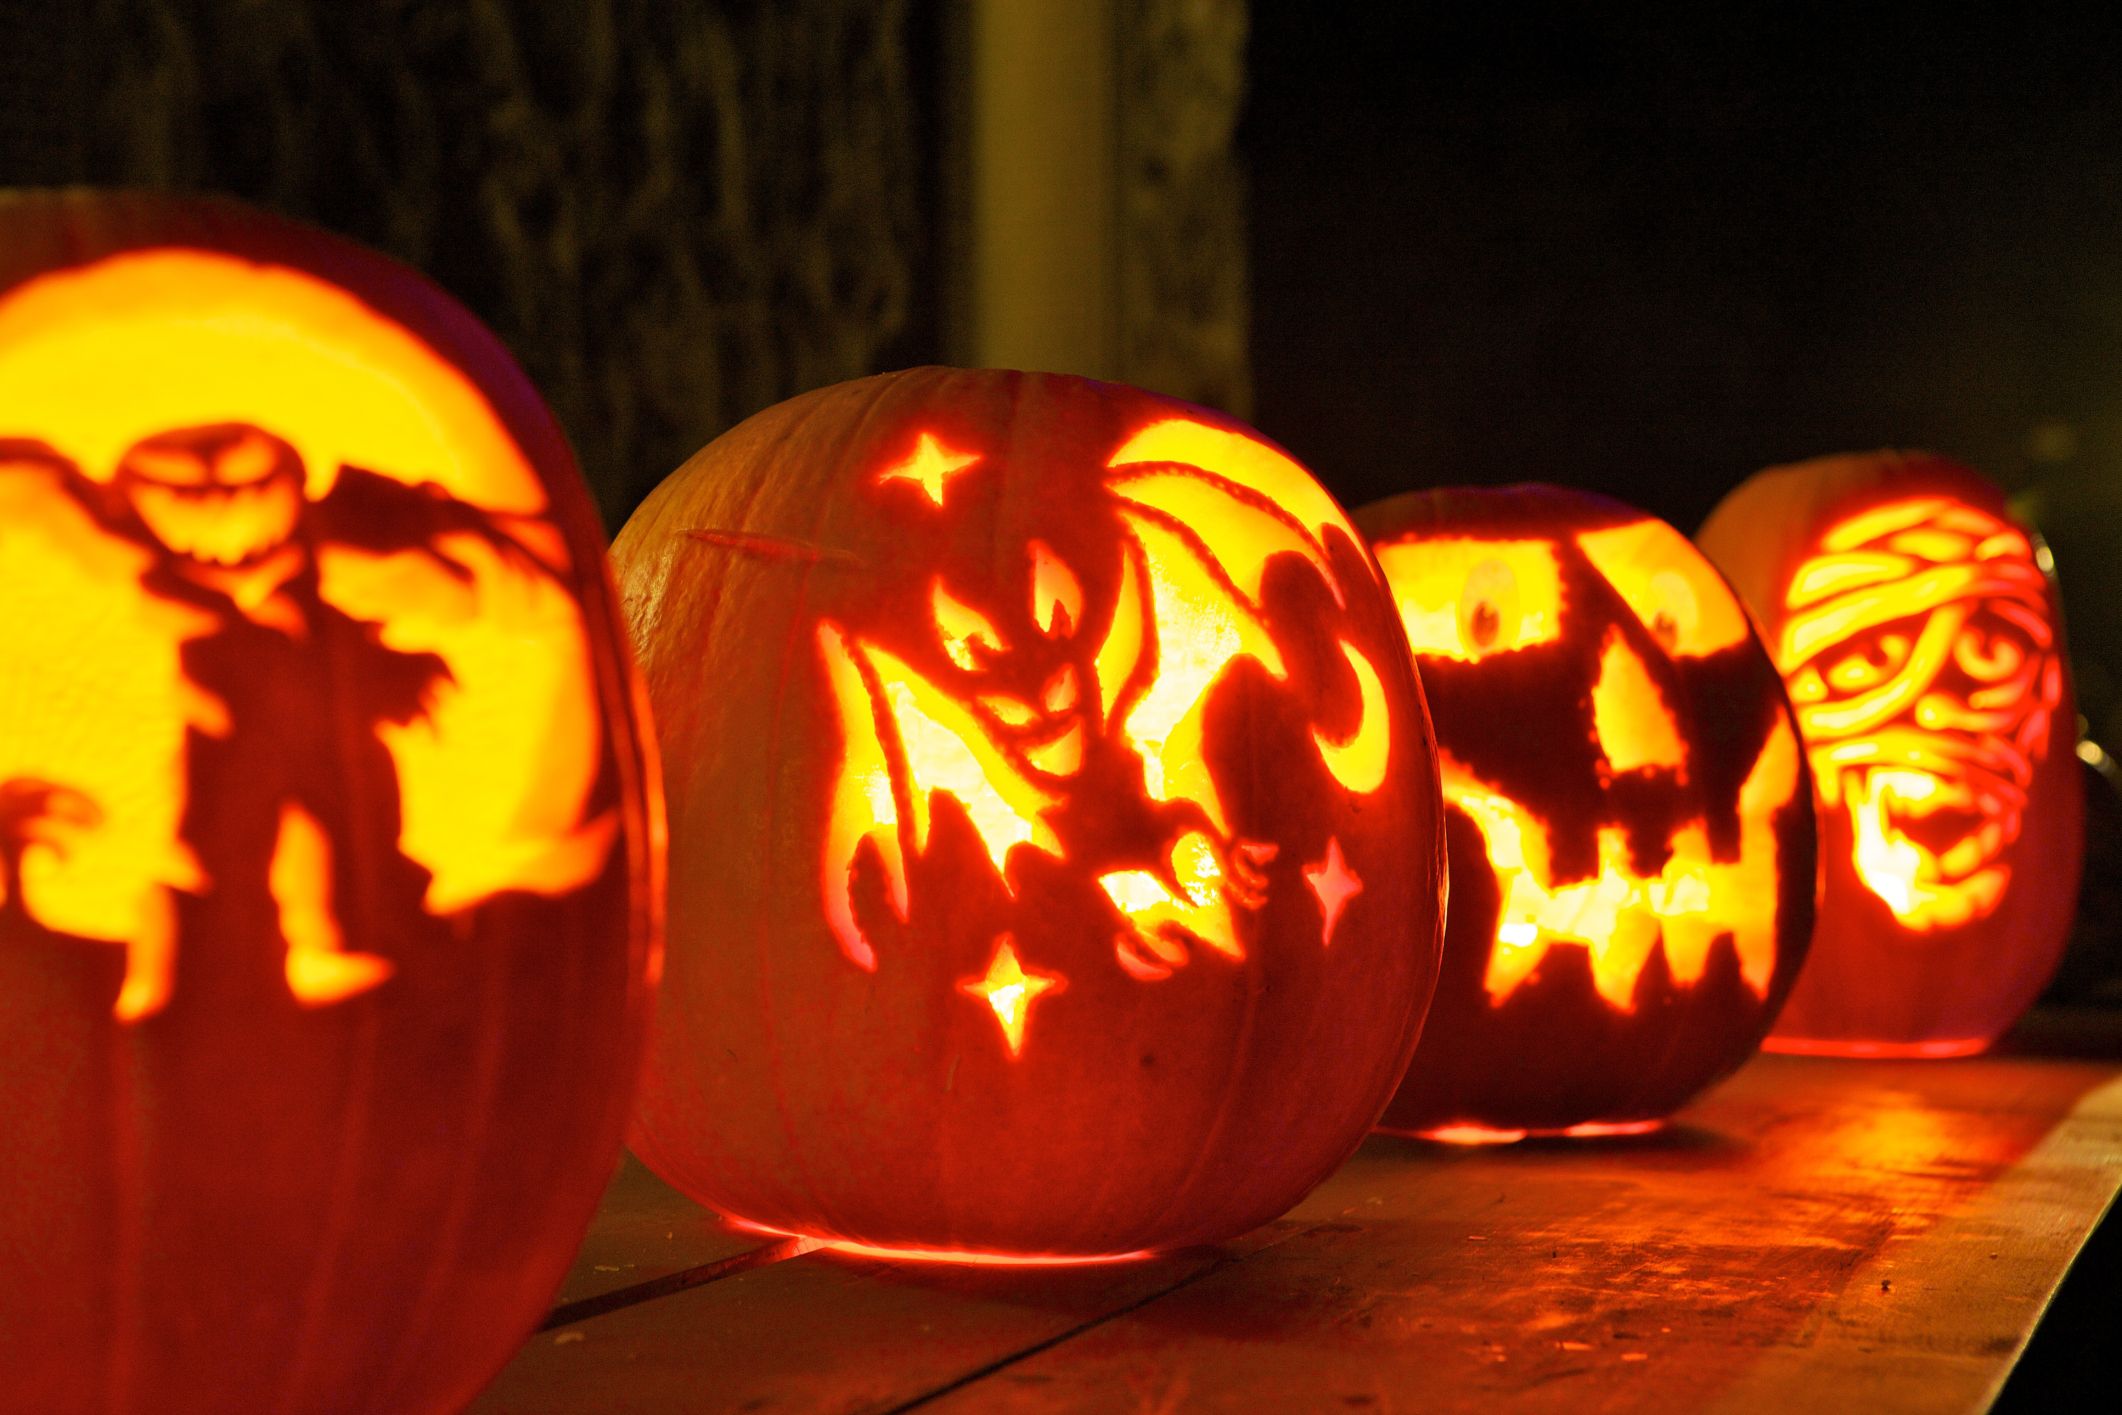 Why Do We Carve Pumpkins on Halloween?